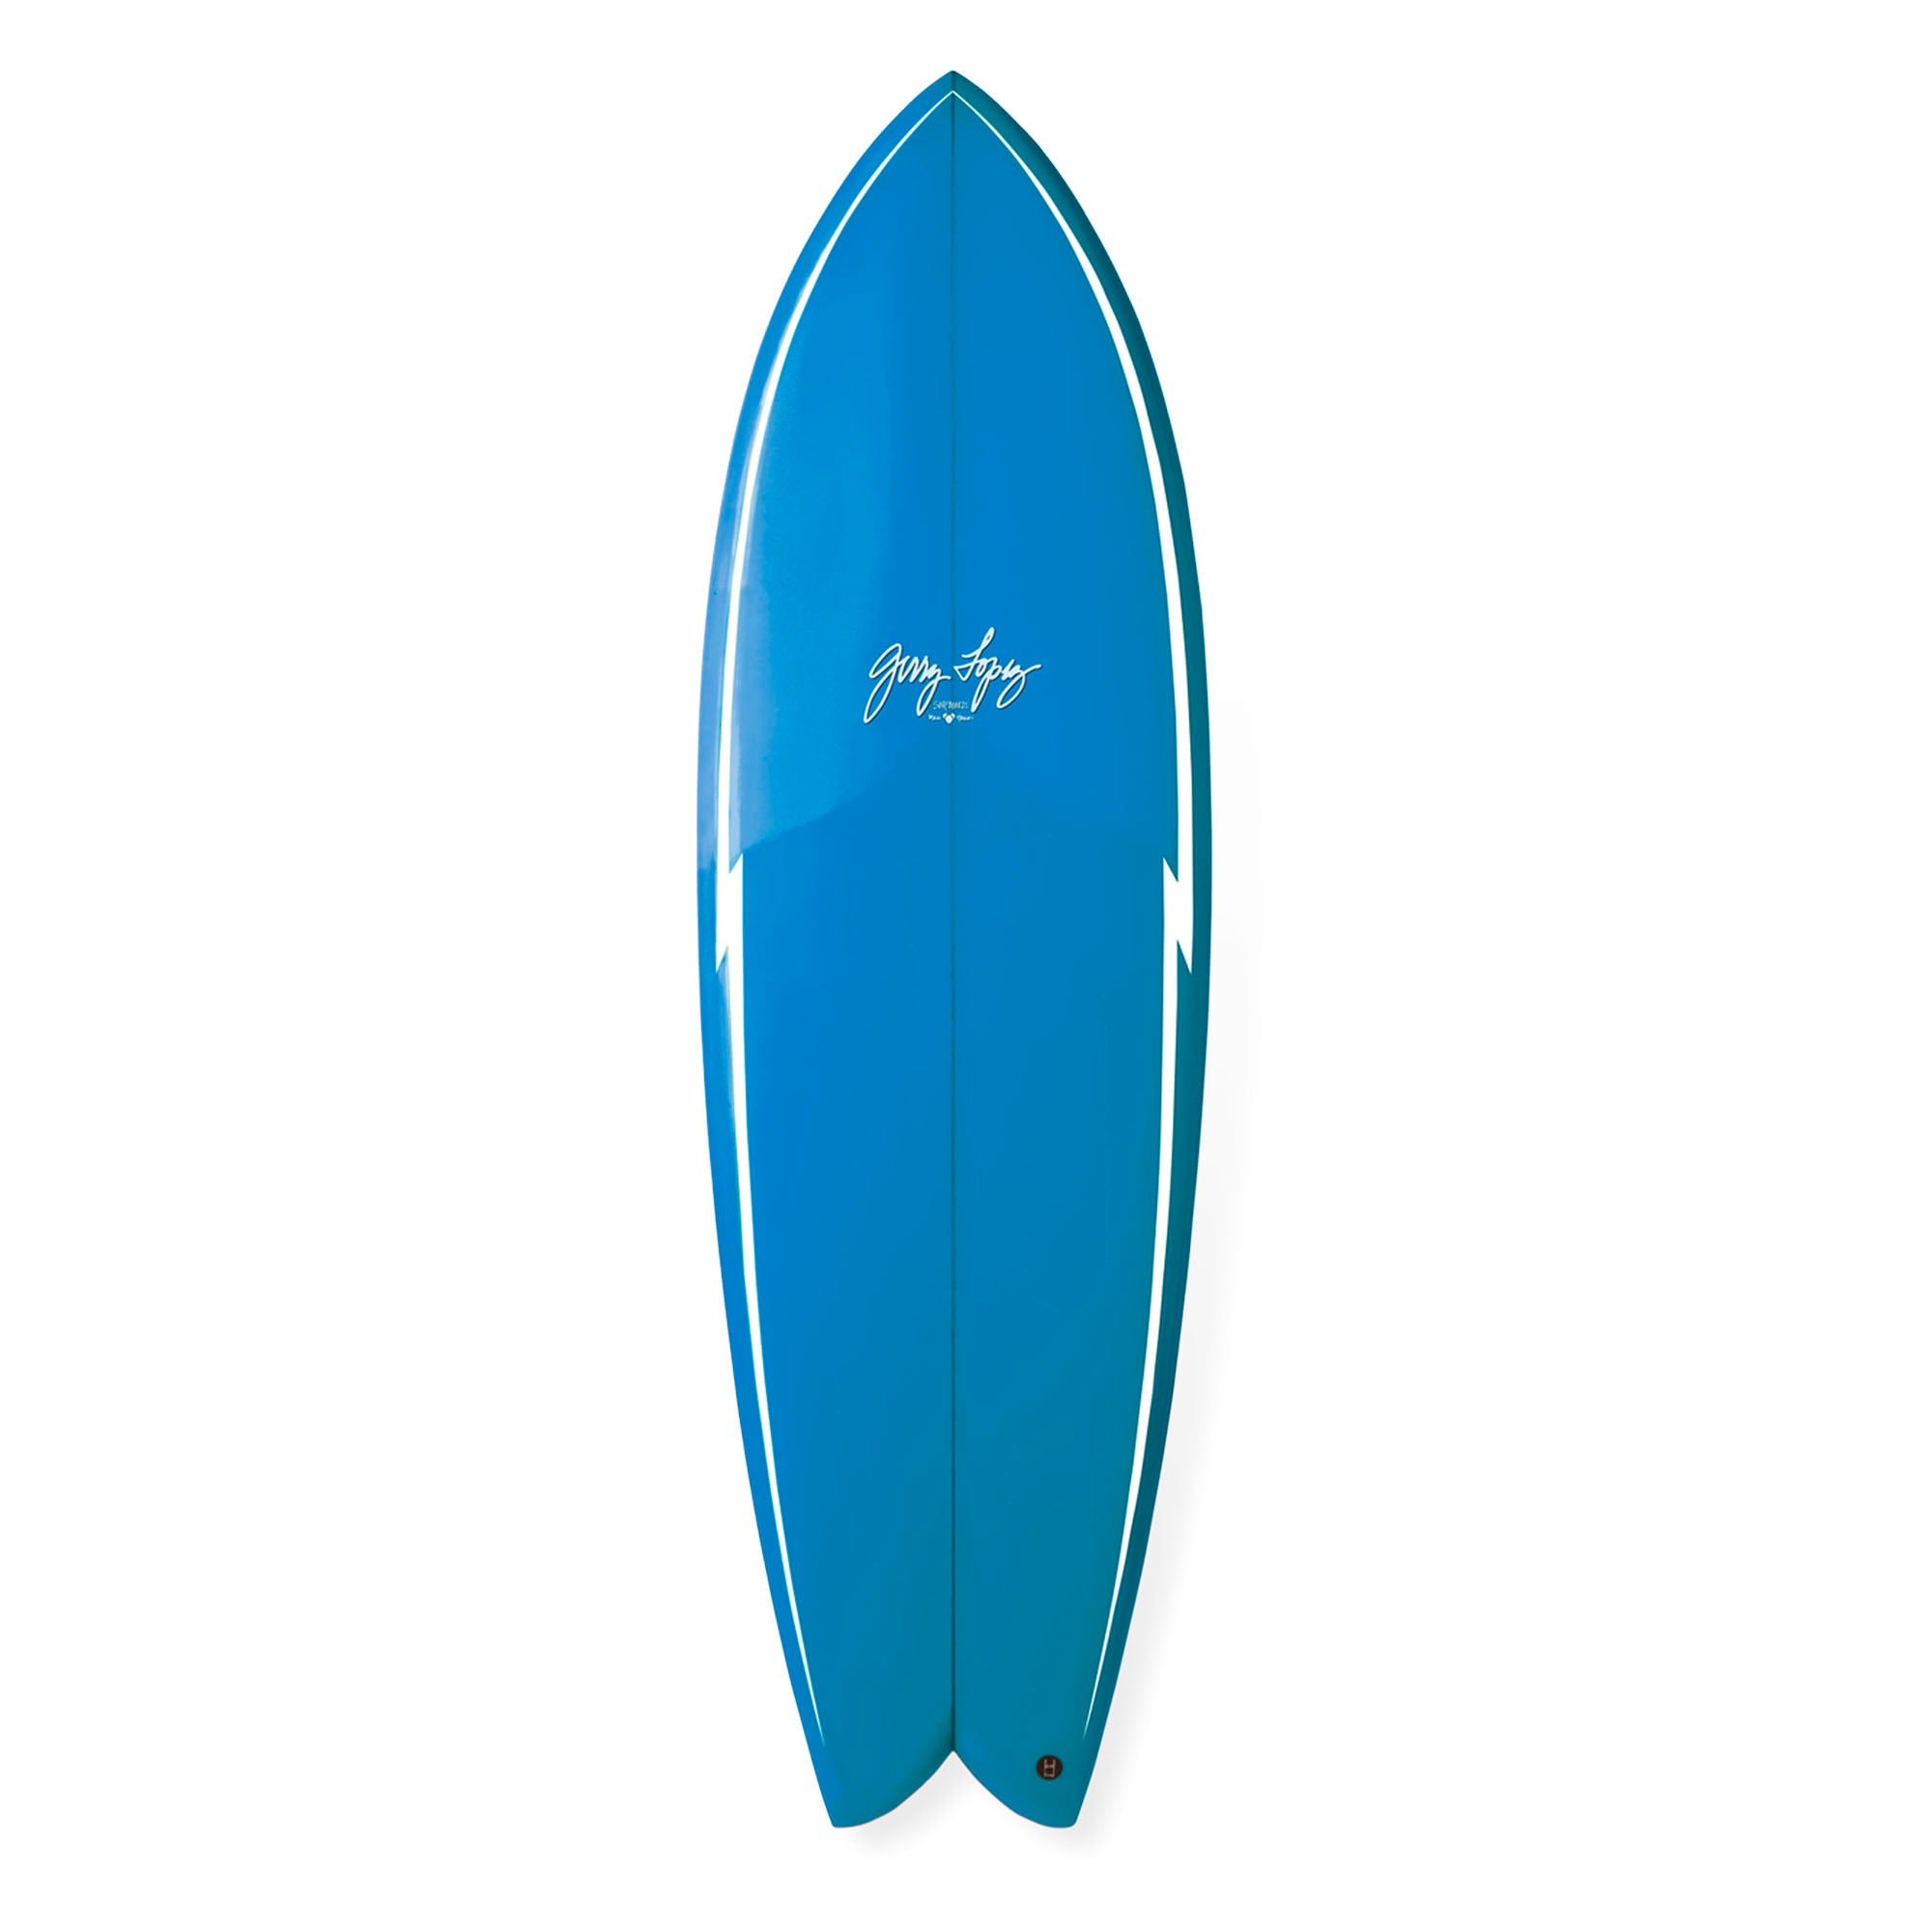 Gerry Lopez Something Fishy Quad Surfboard in brilliant blue